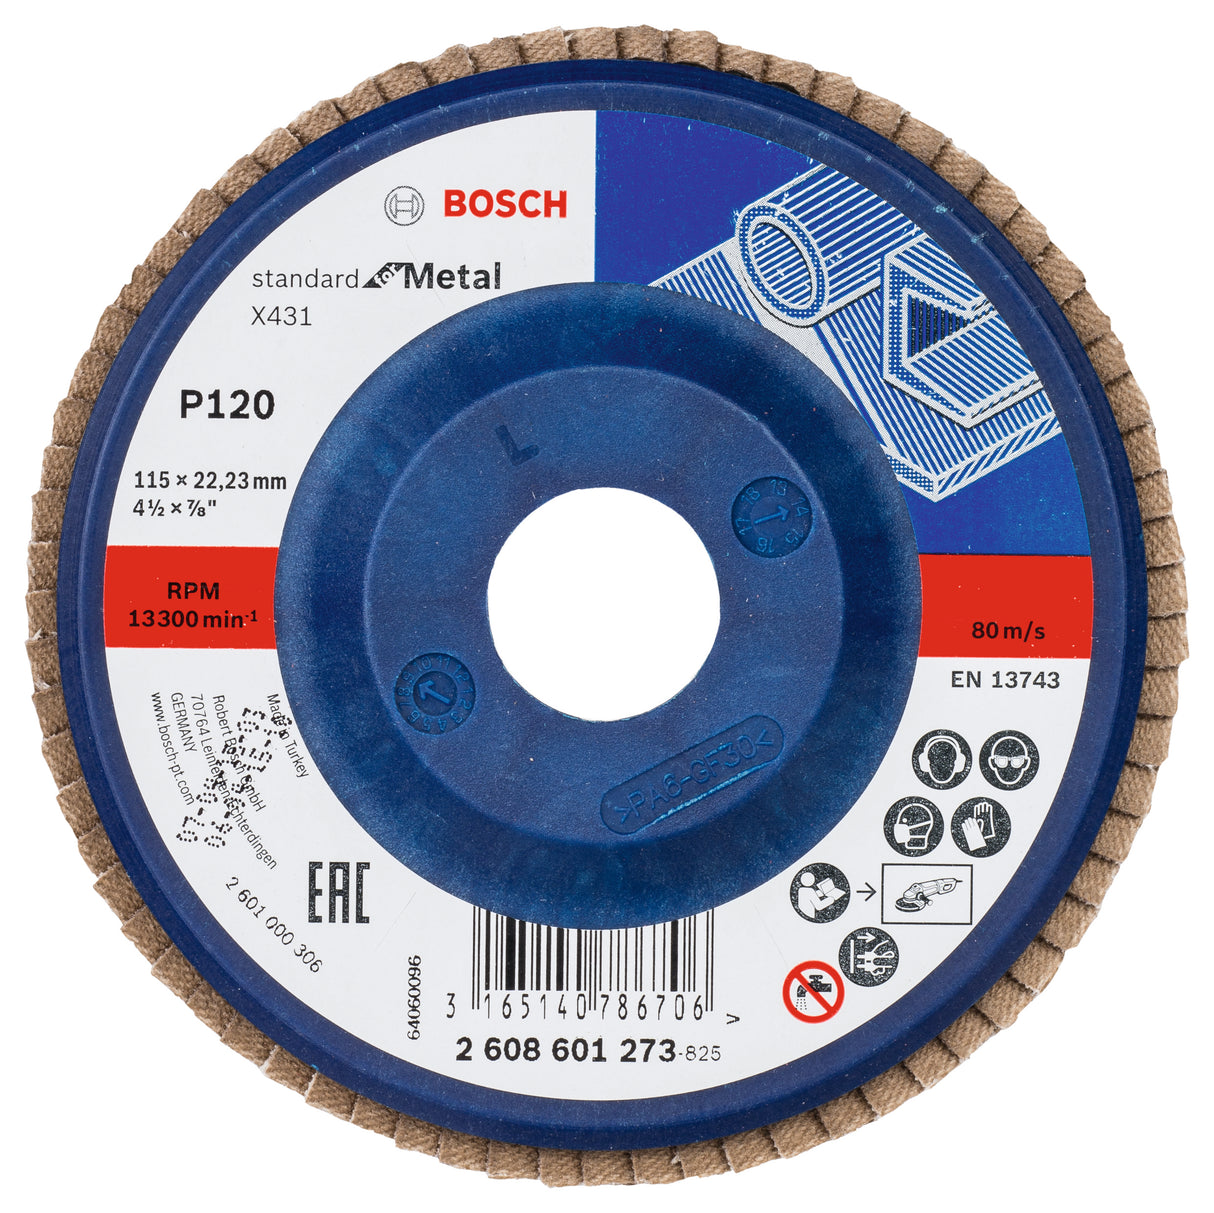 Bosch Professional X431 Flap Disc - Standard for Metal - 115mm x 22.23mm - G120